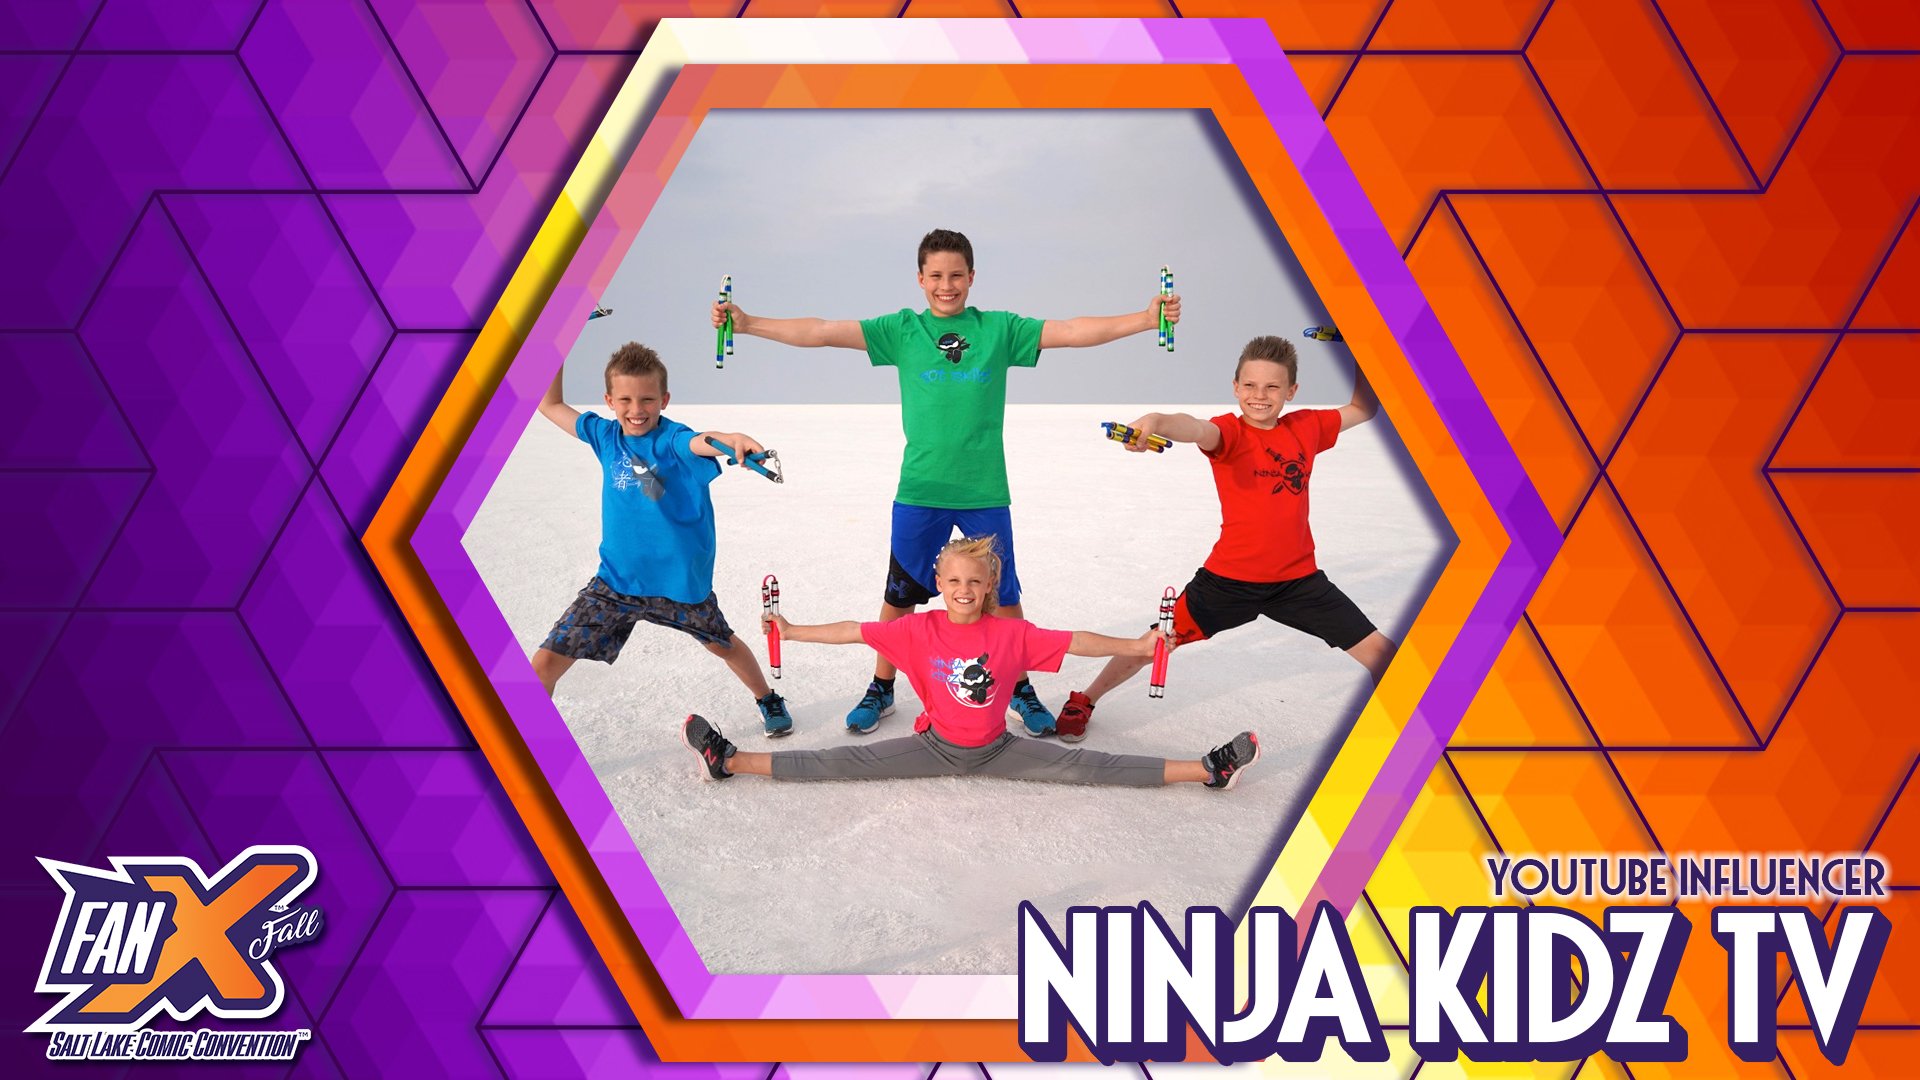 Ninja Kidz TV. FanX® Salt Lake Comic Convention™